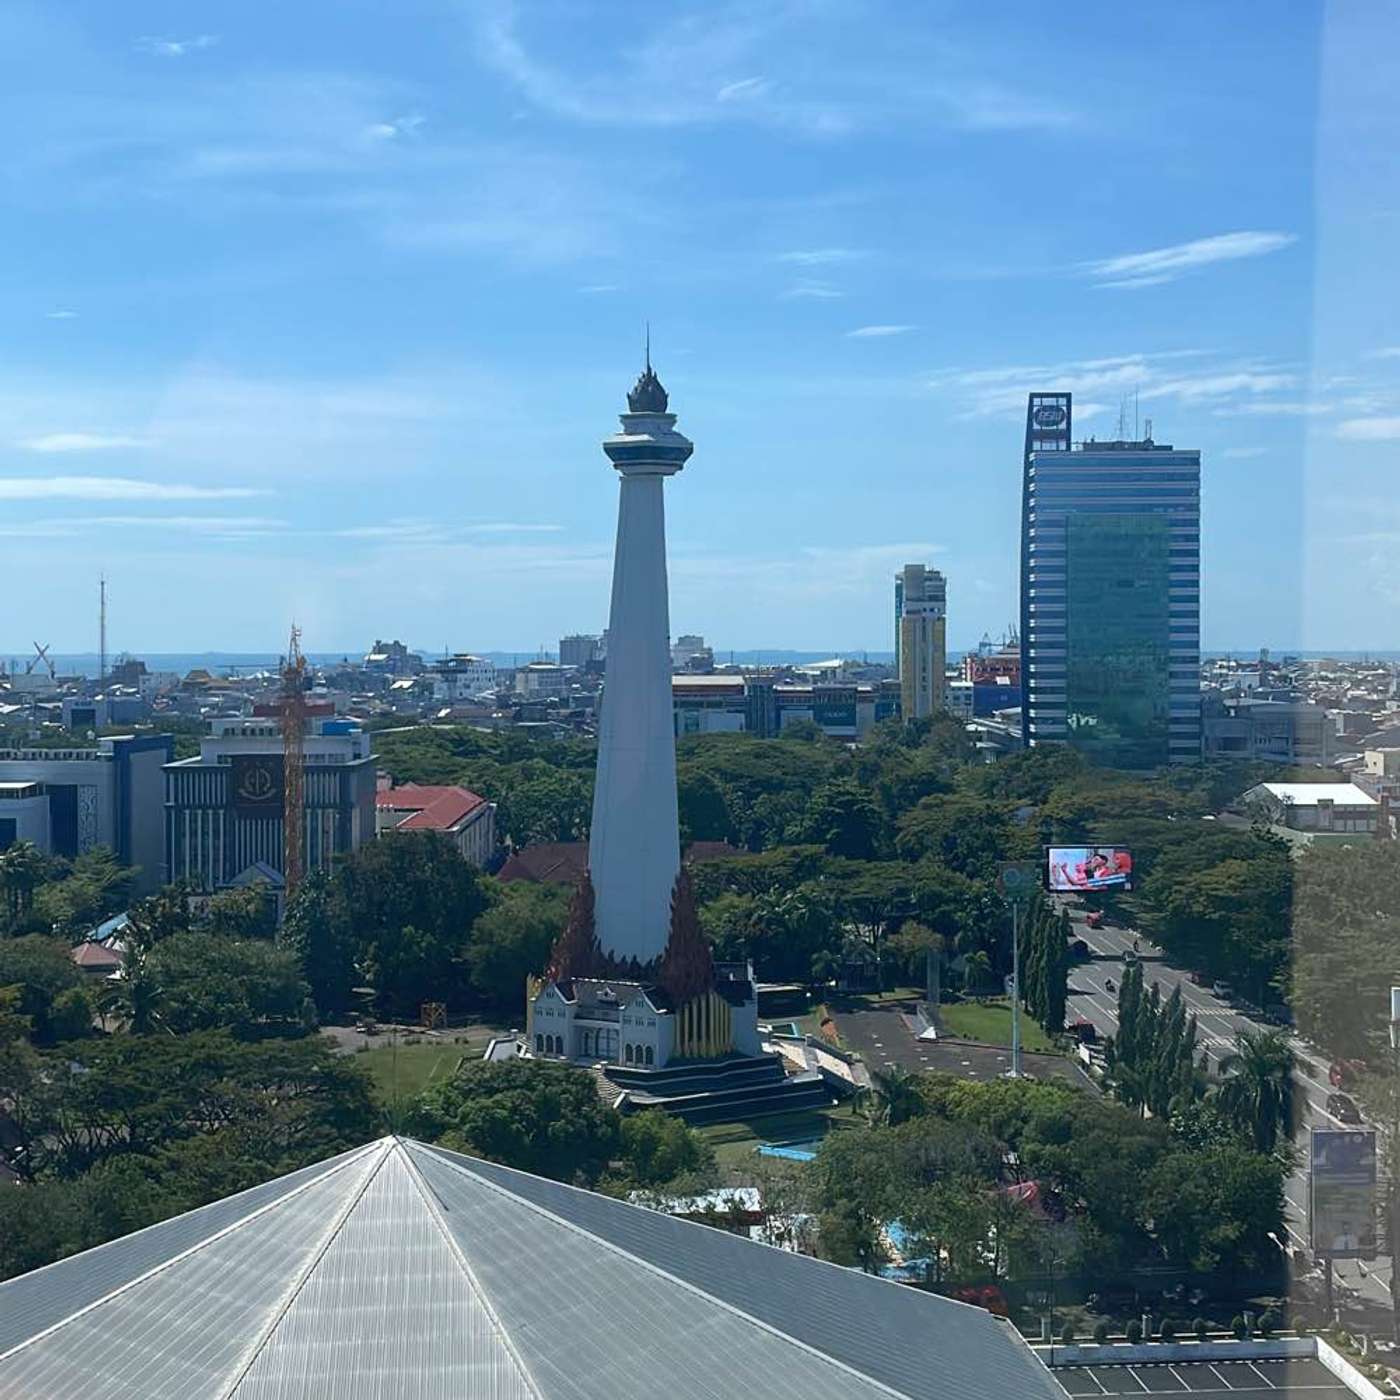 Makassar got its own Jakarta-styled National monument